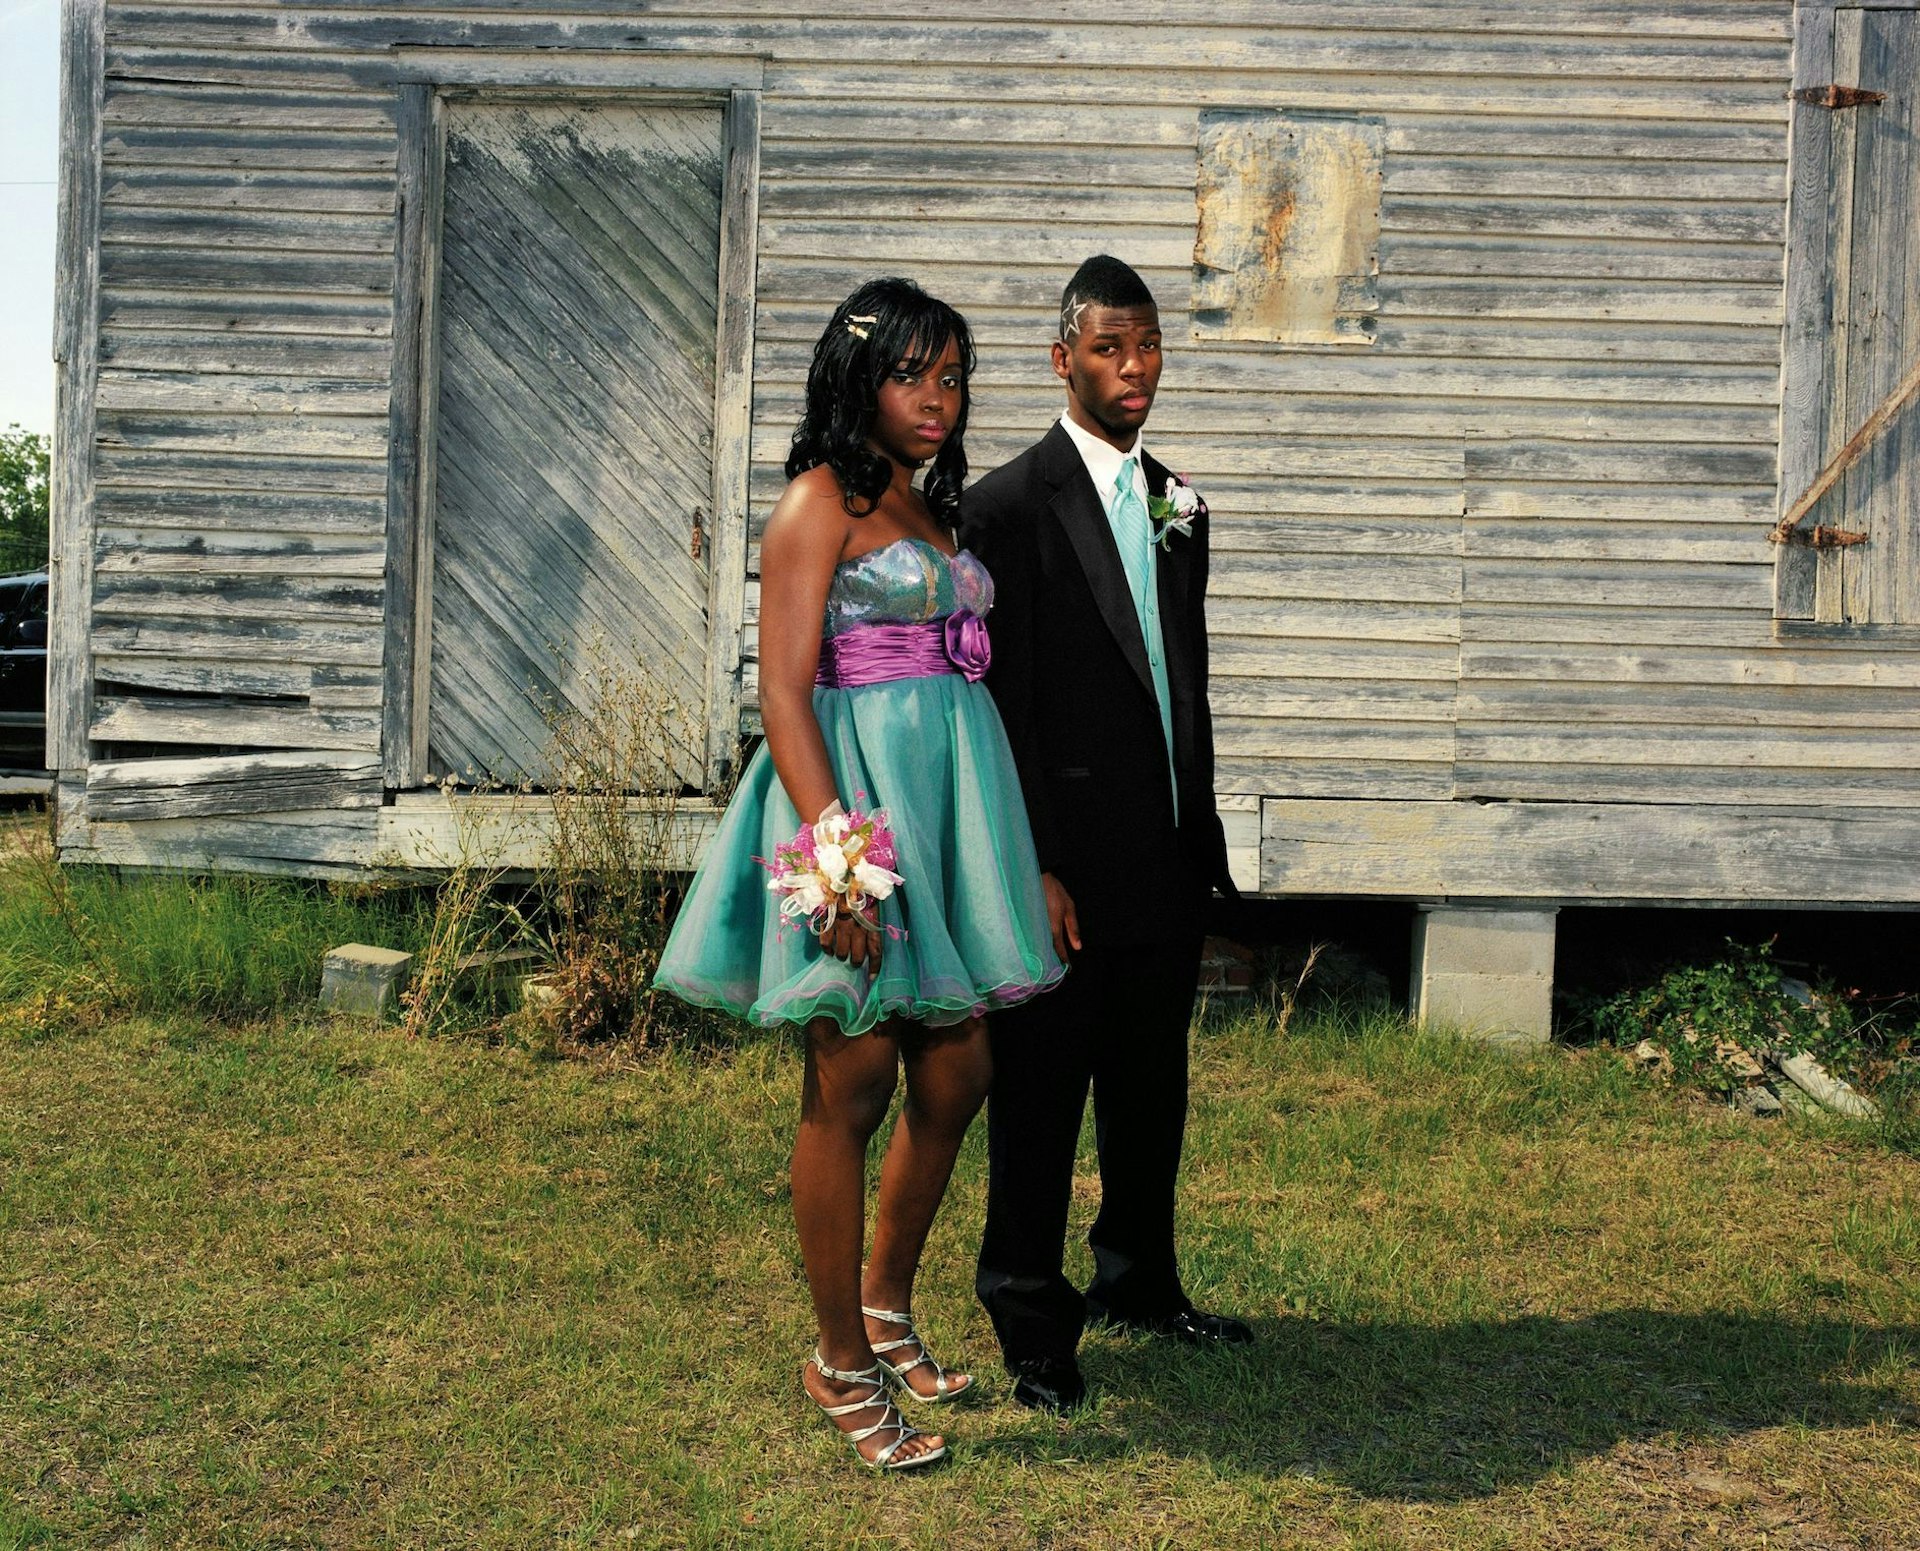 Potent photos of racially segregated proms in Georgia